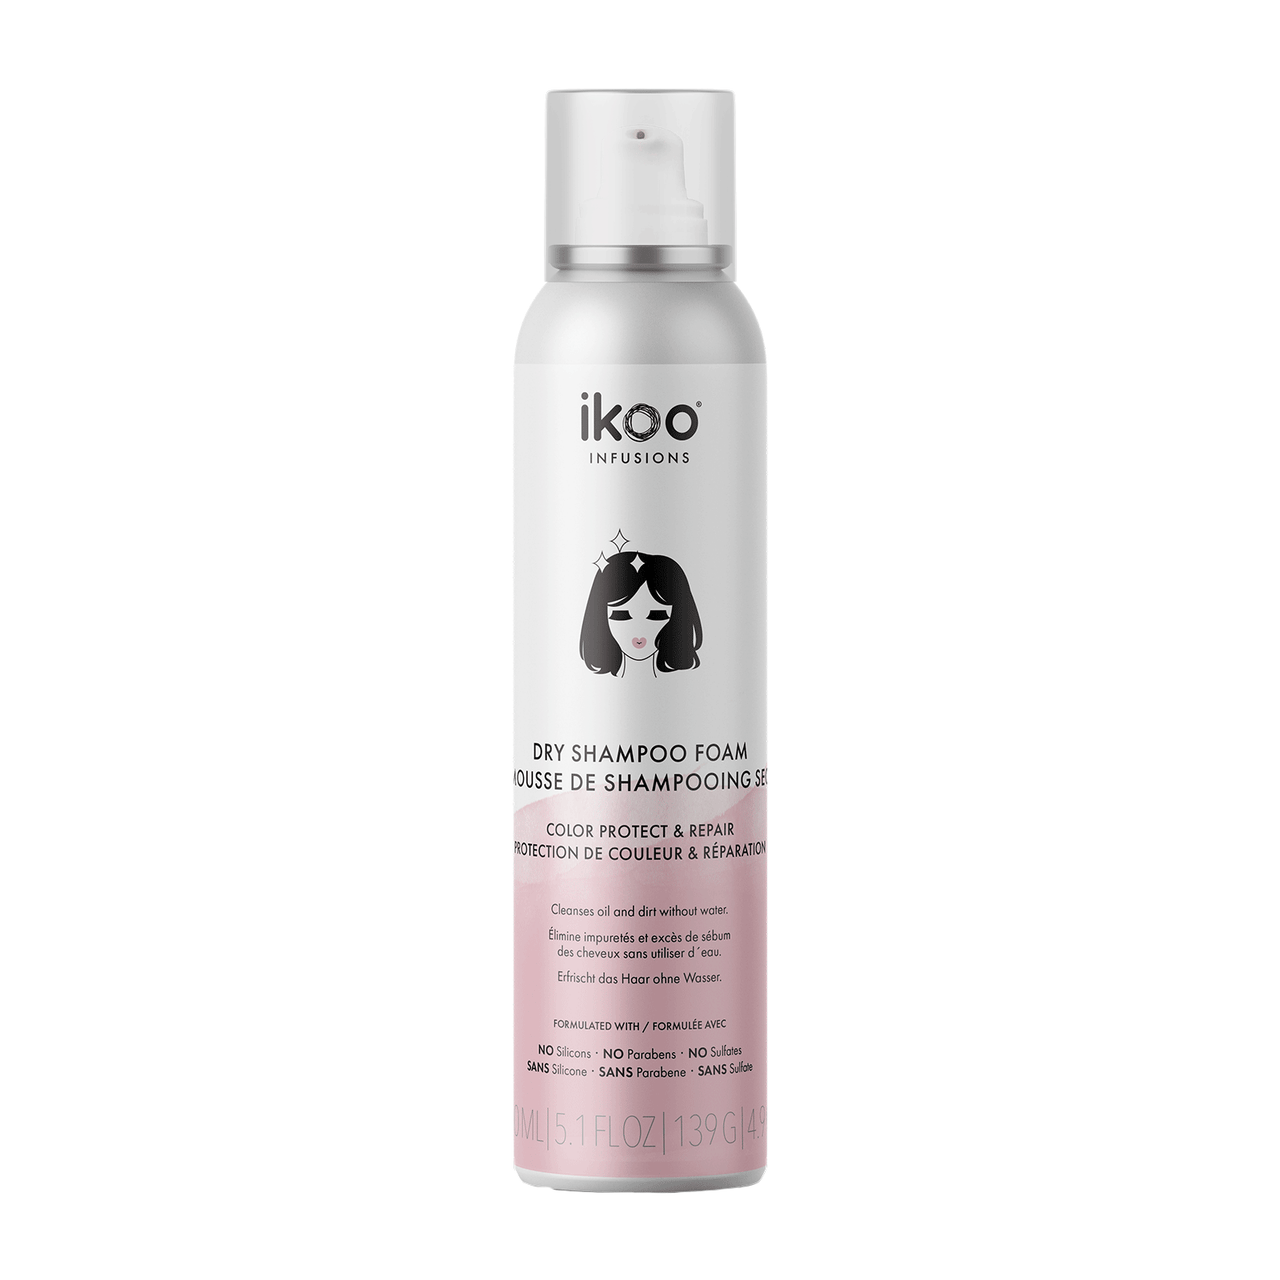 ikoo Dry Shampoo Foam Color Protect & Repair 5.1 fl. oz.